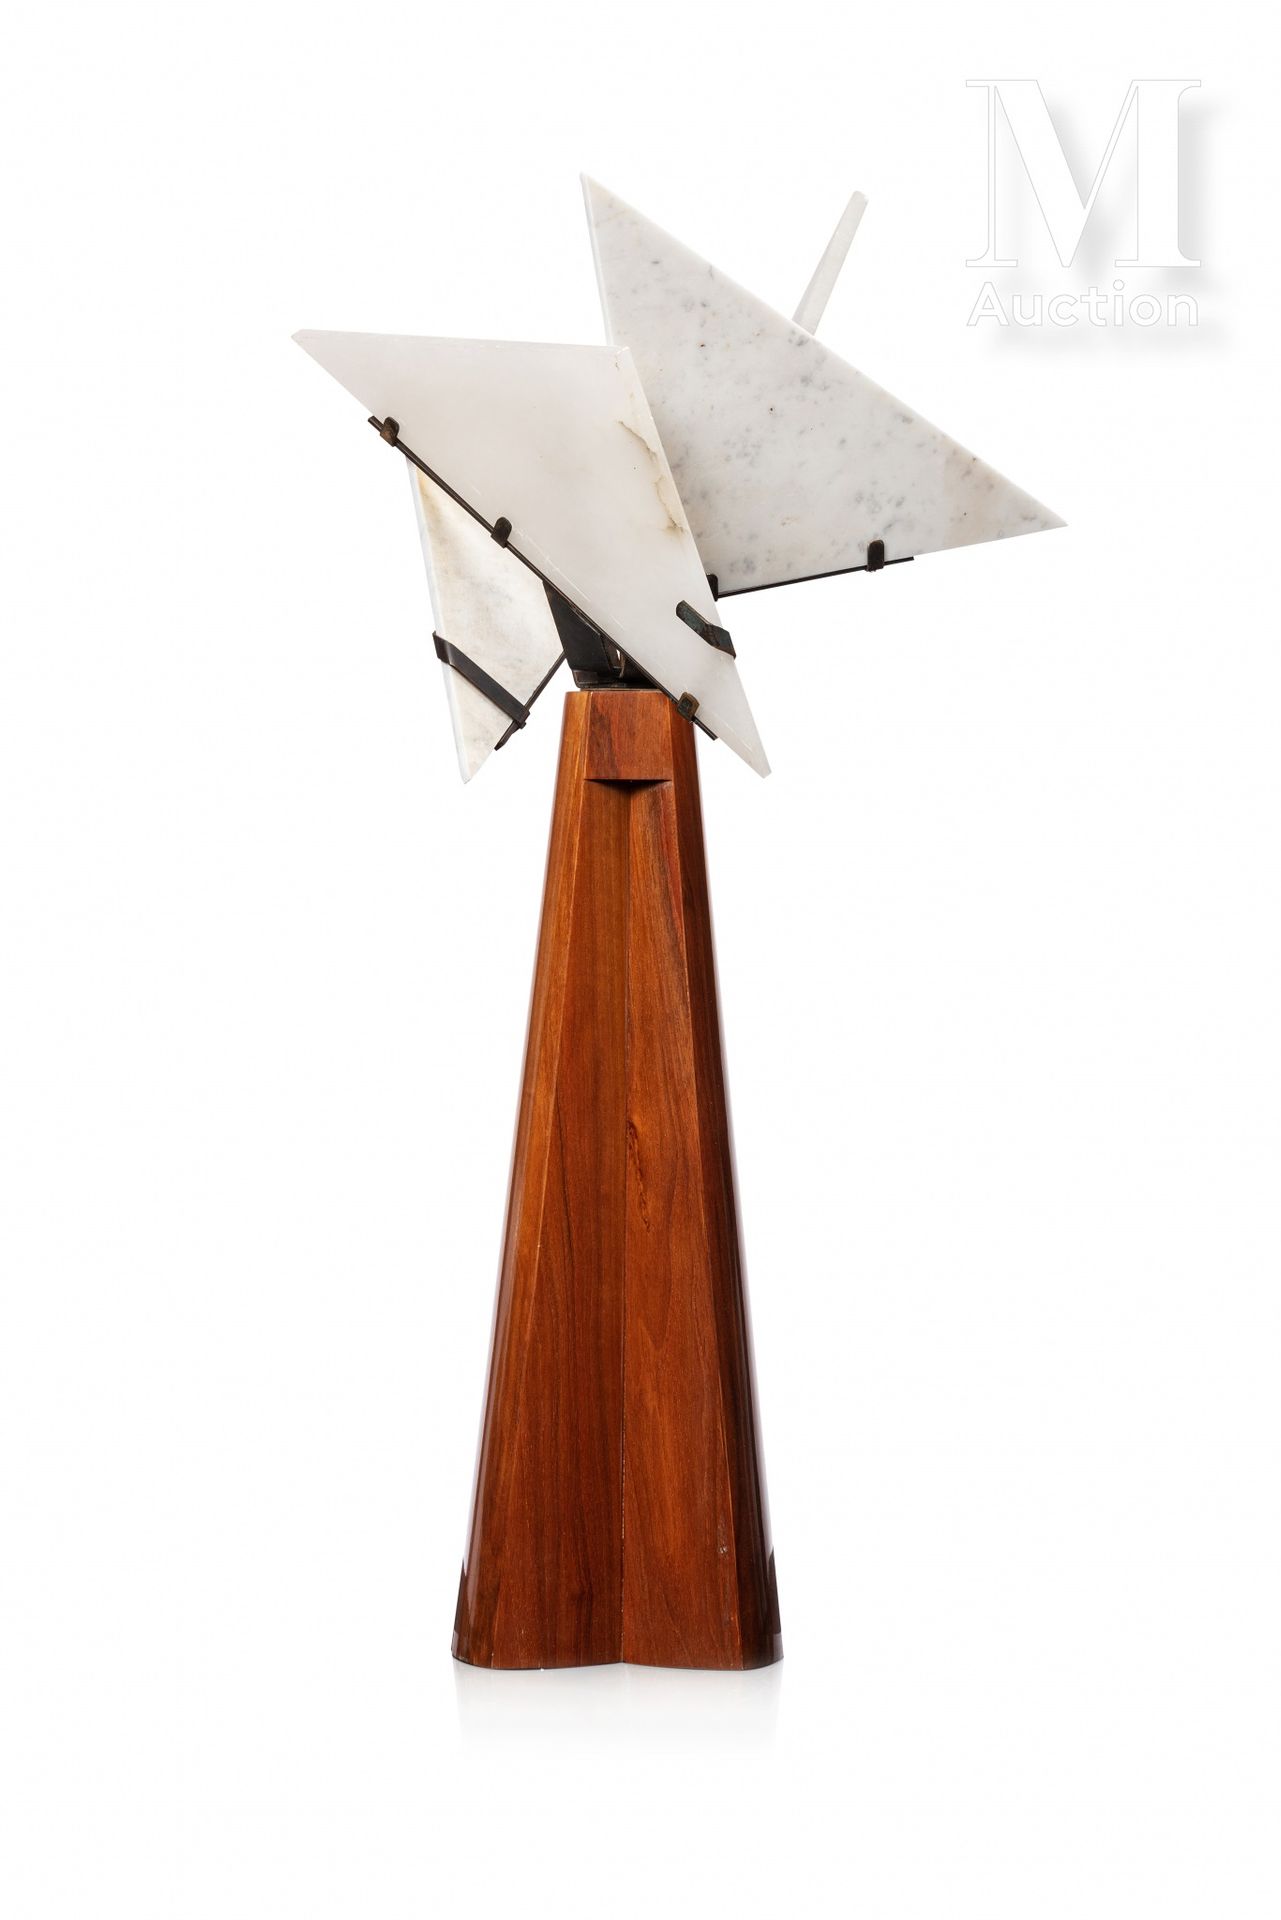 Editions Pierre CHAREAU "Religious"

Mahogany veneer desk lamp enclosing four tr&hellip;